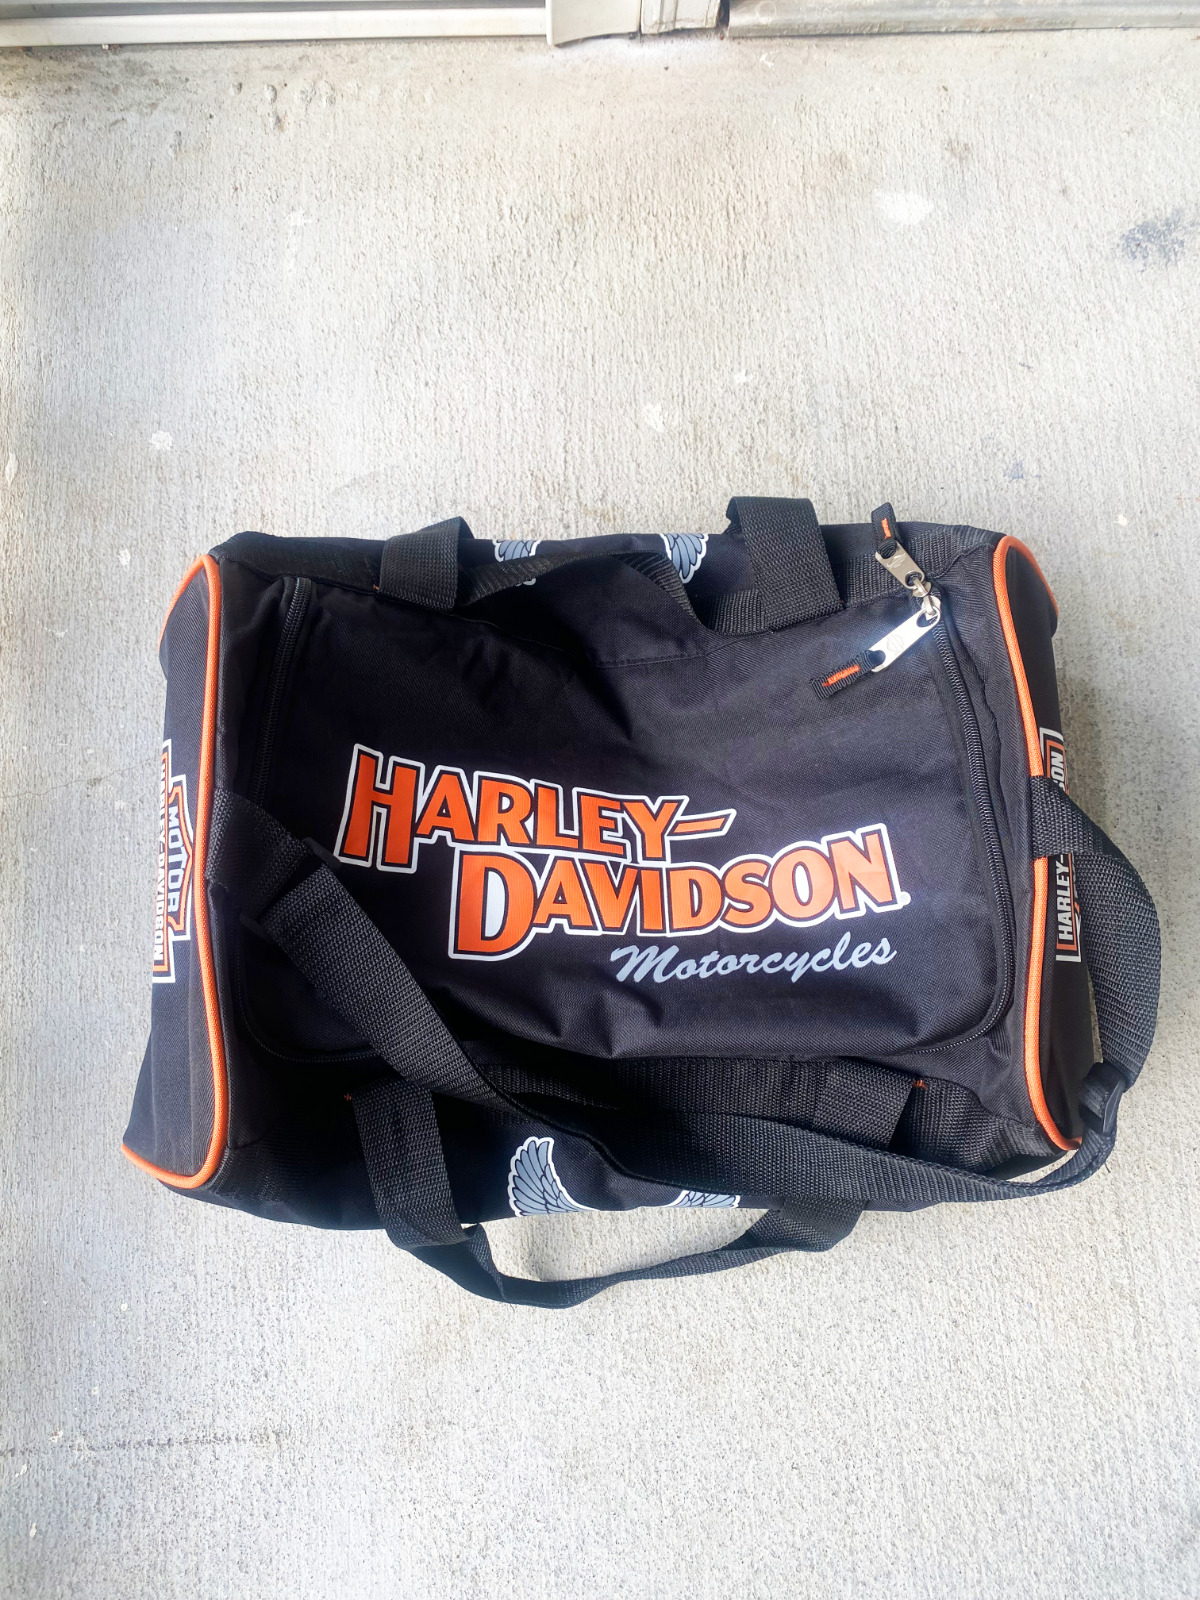 HARLEY DAVIDSON Motorcylcles Genuine Logo Black Orange Zip Duffle Bag